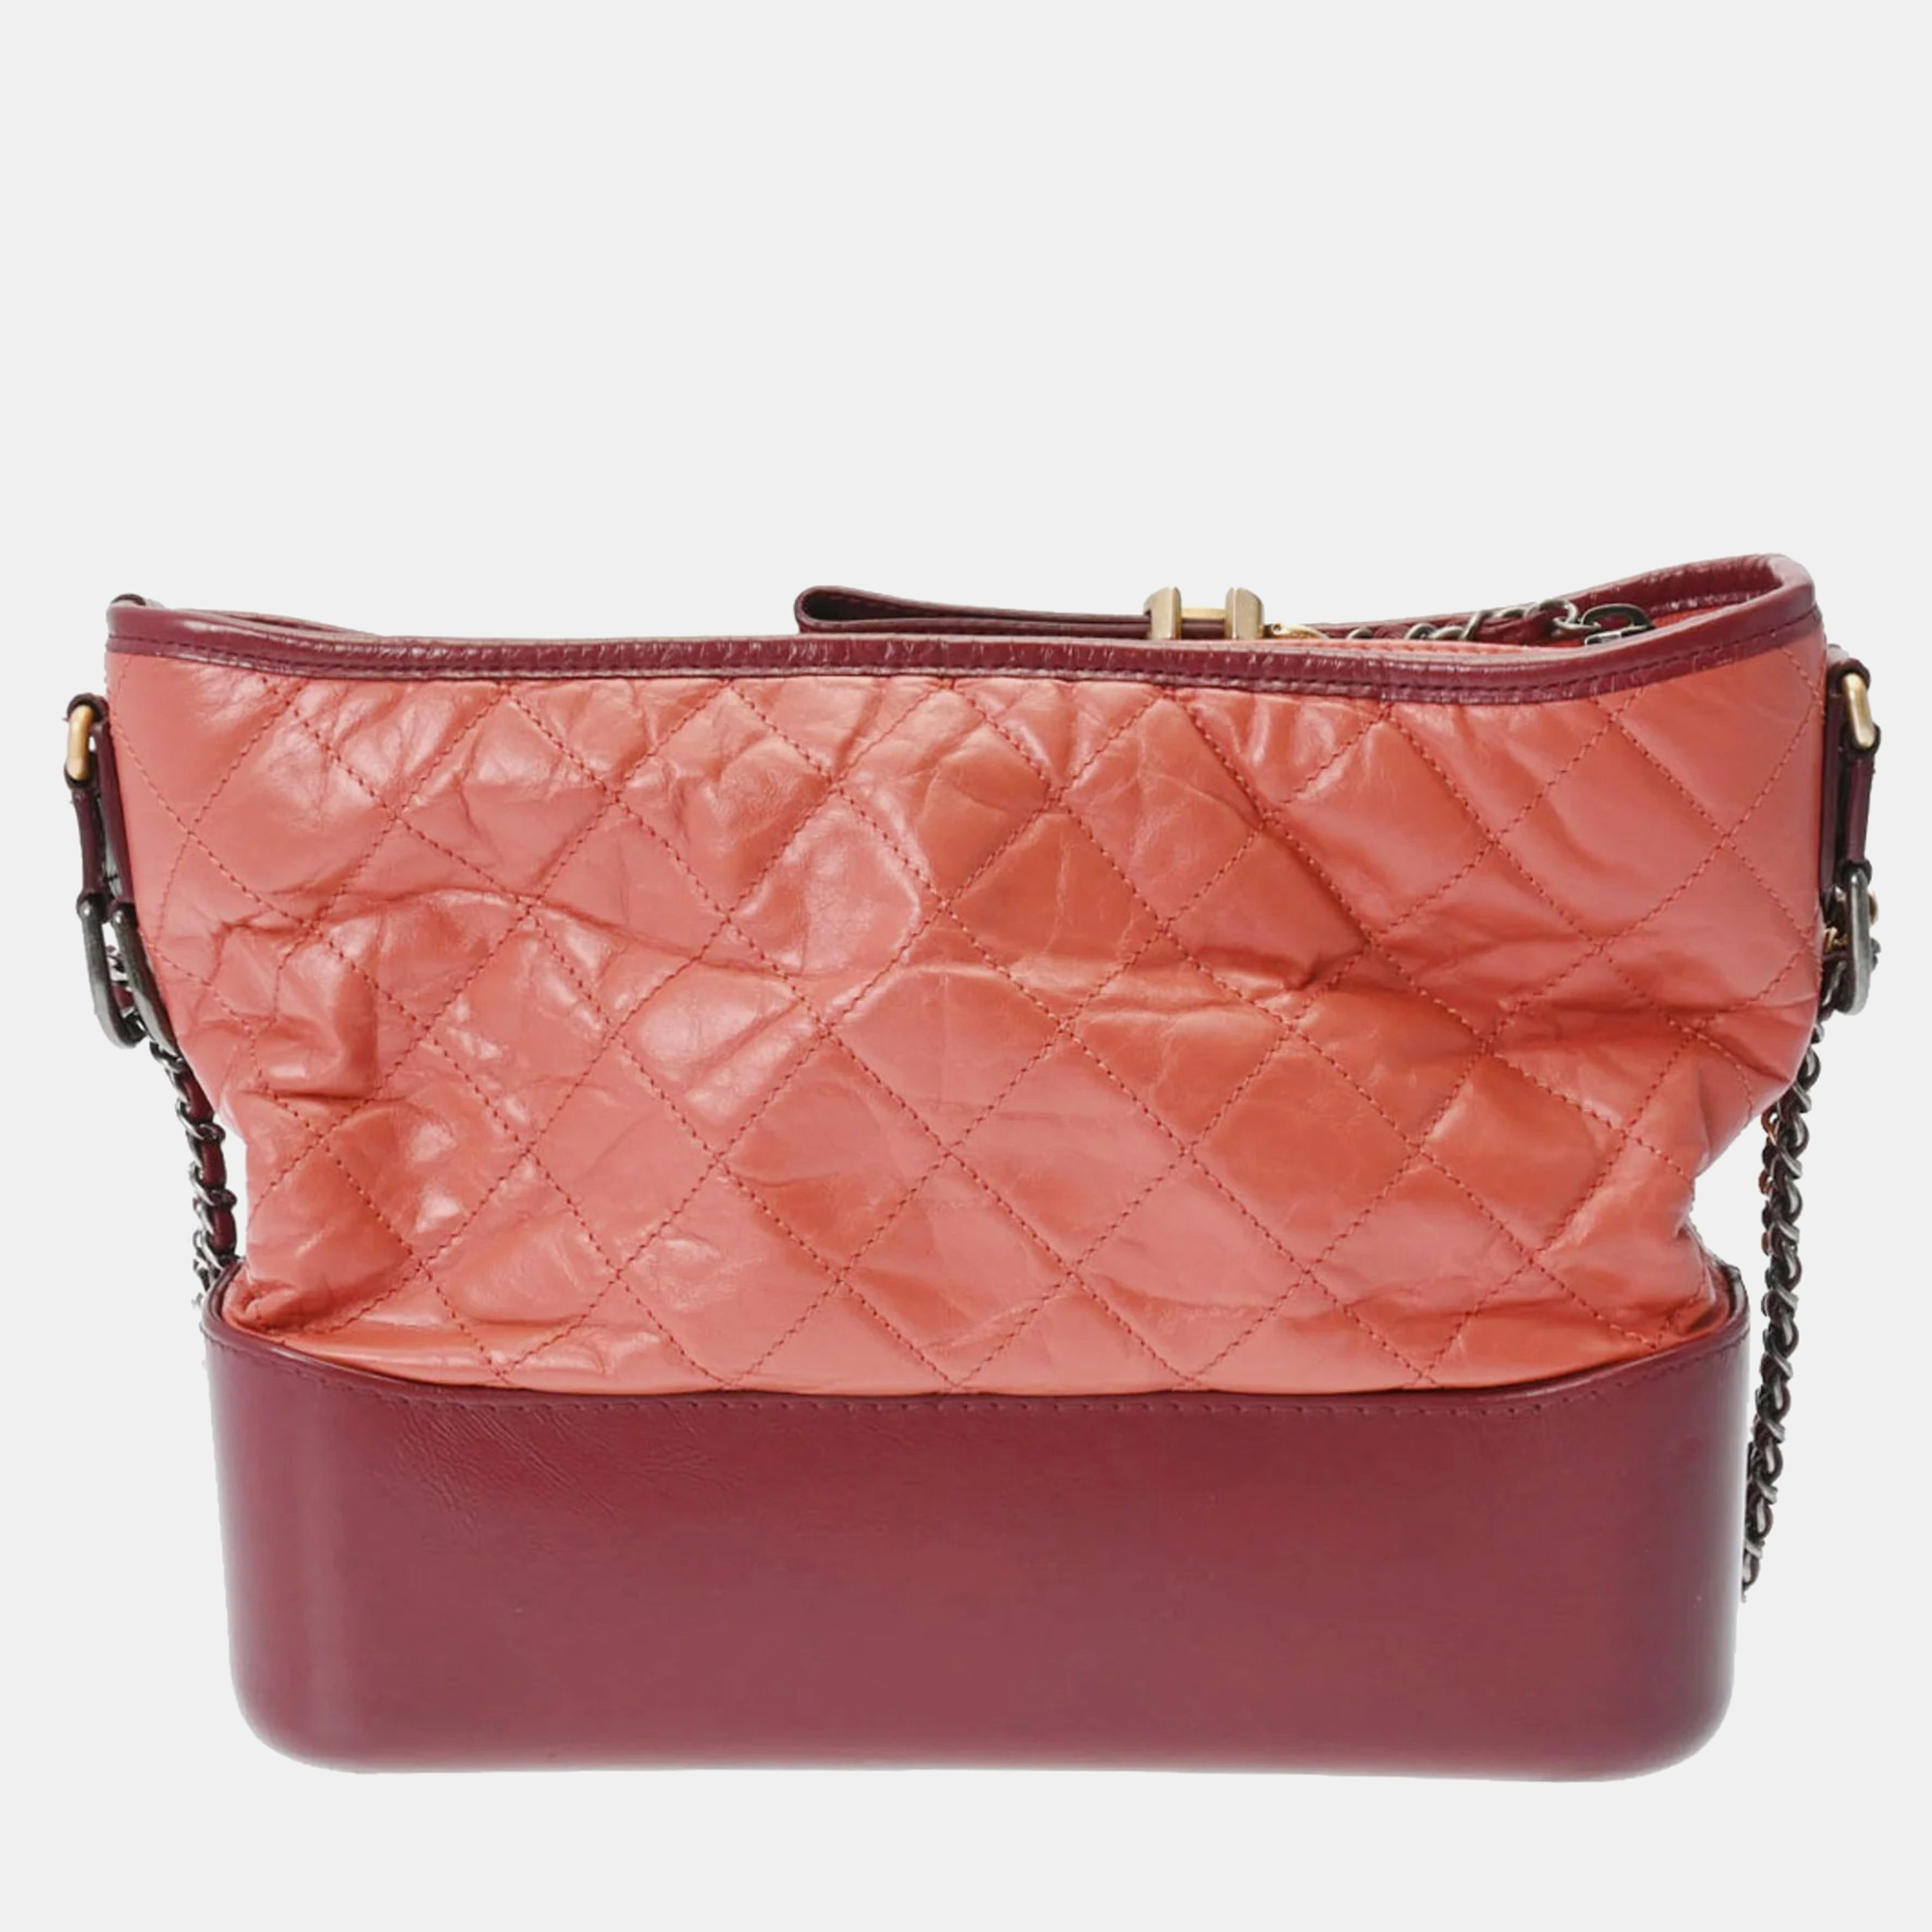 Chanel pink/bordeaux leather small gabrielle shoulder bags